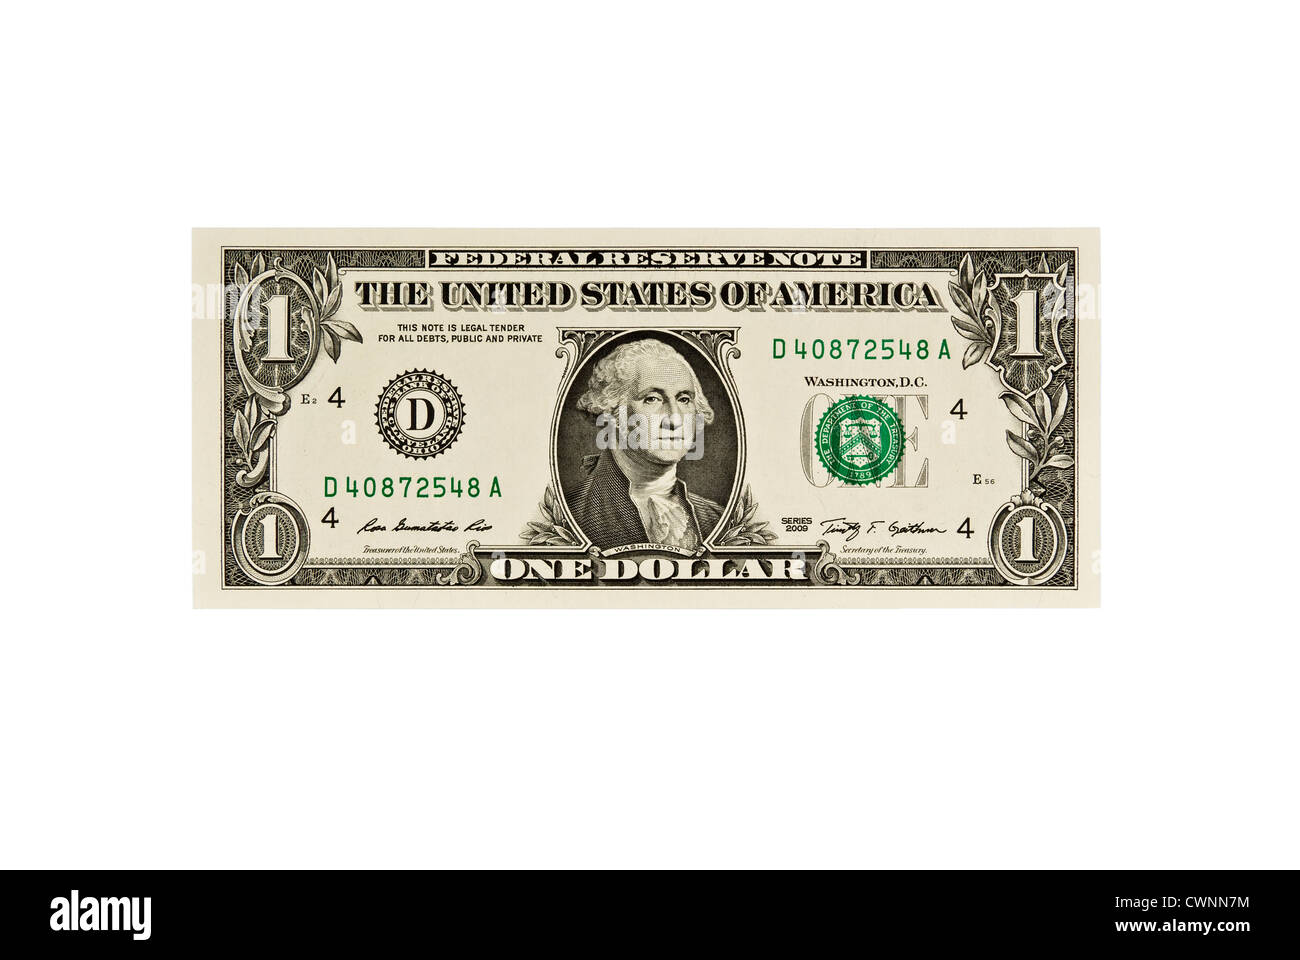 One-dollar-bill, 1 Dollar, dollar bill, isolated on 100% white background Stock Photo